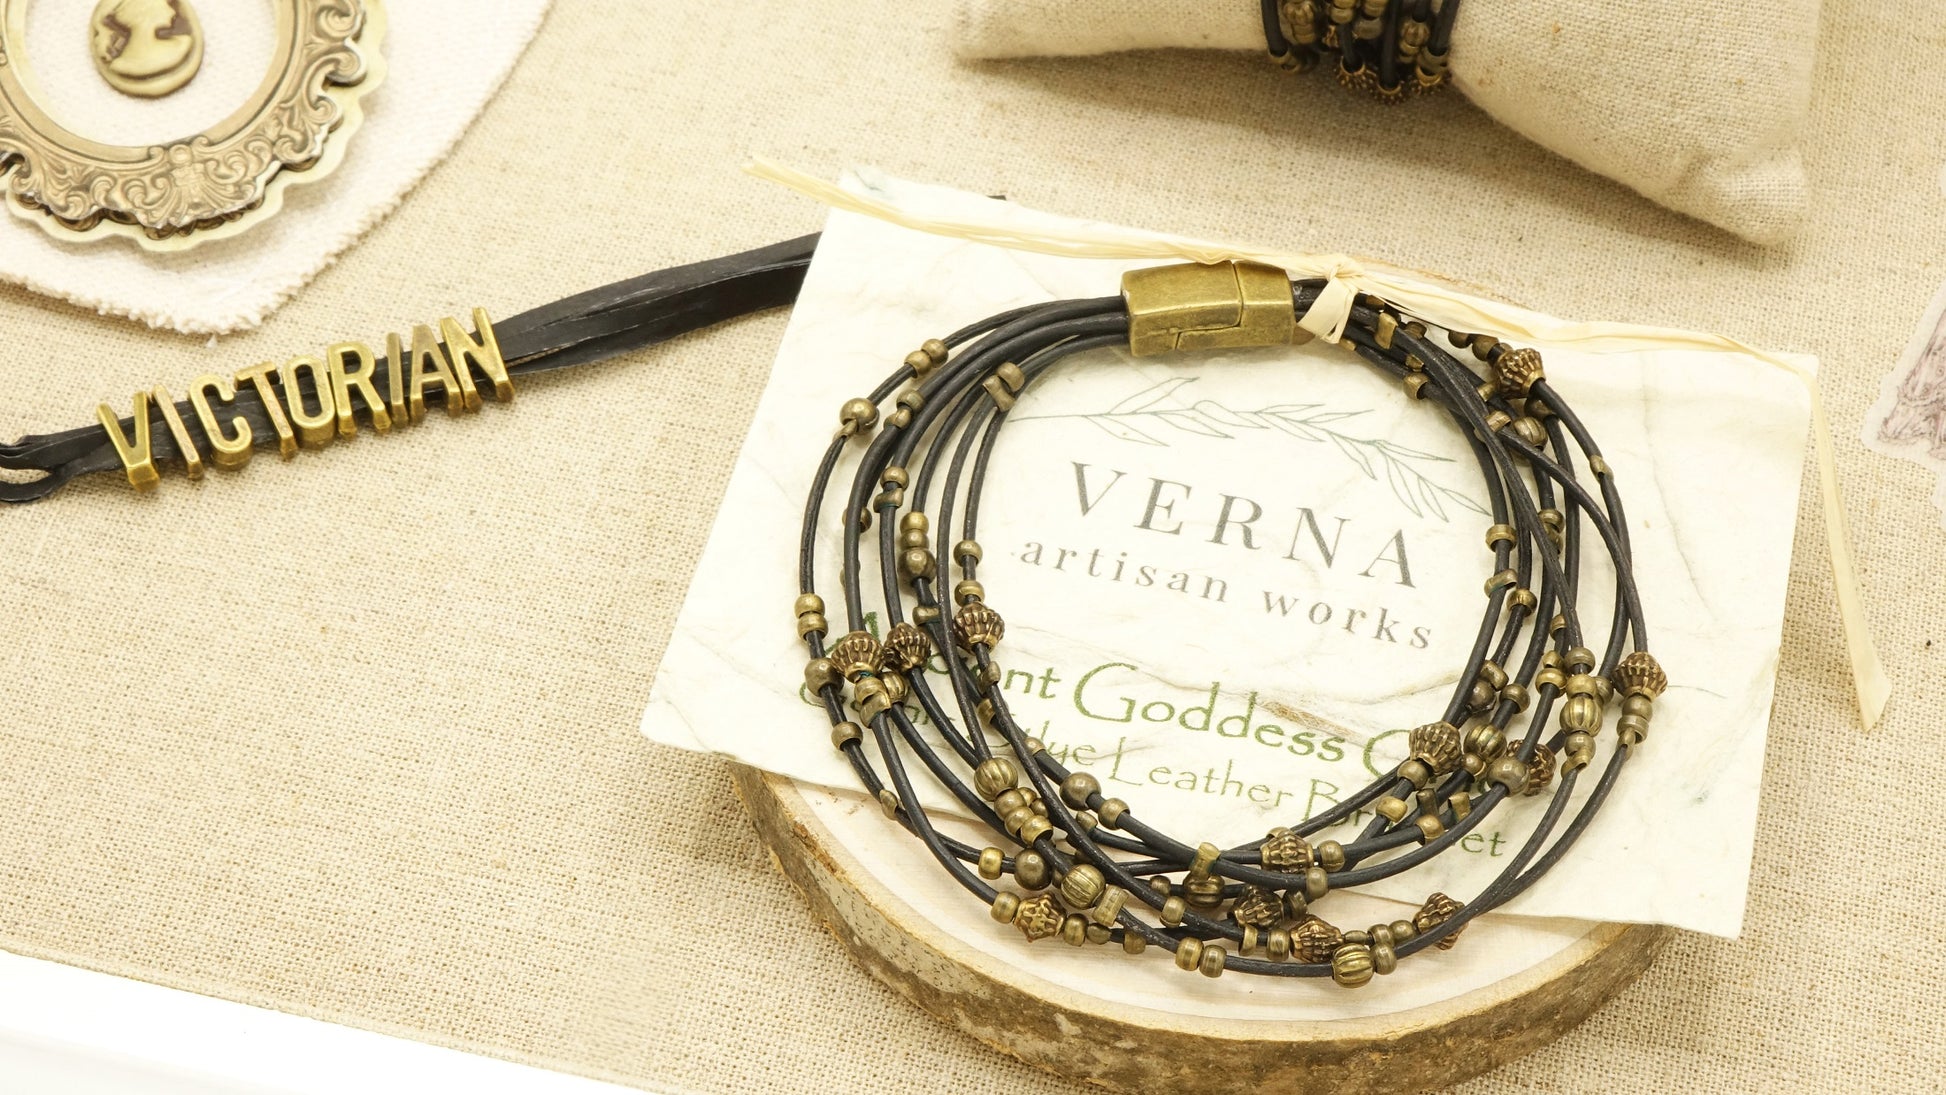 Victorian Style Rope Bracelet - Gothic - Verna Artisan Works